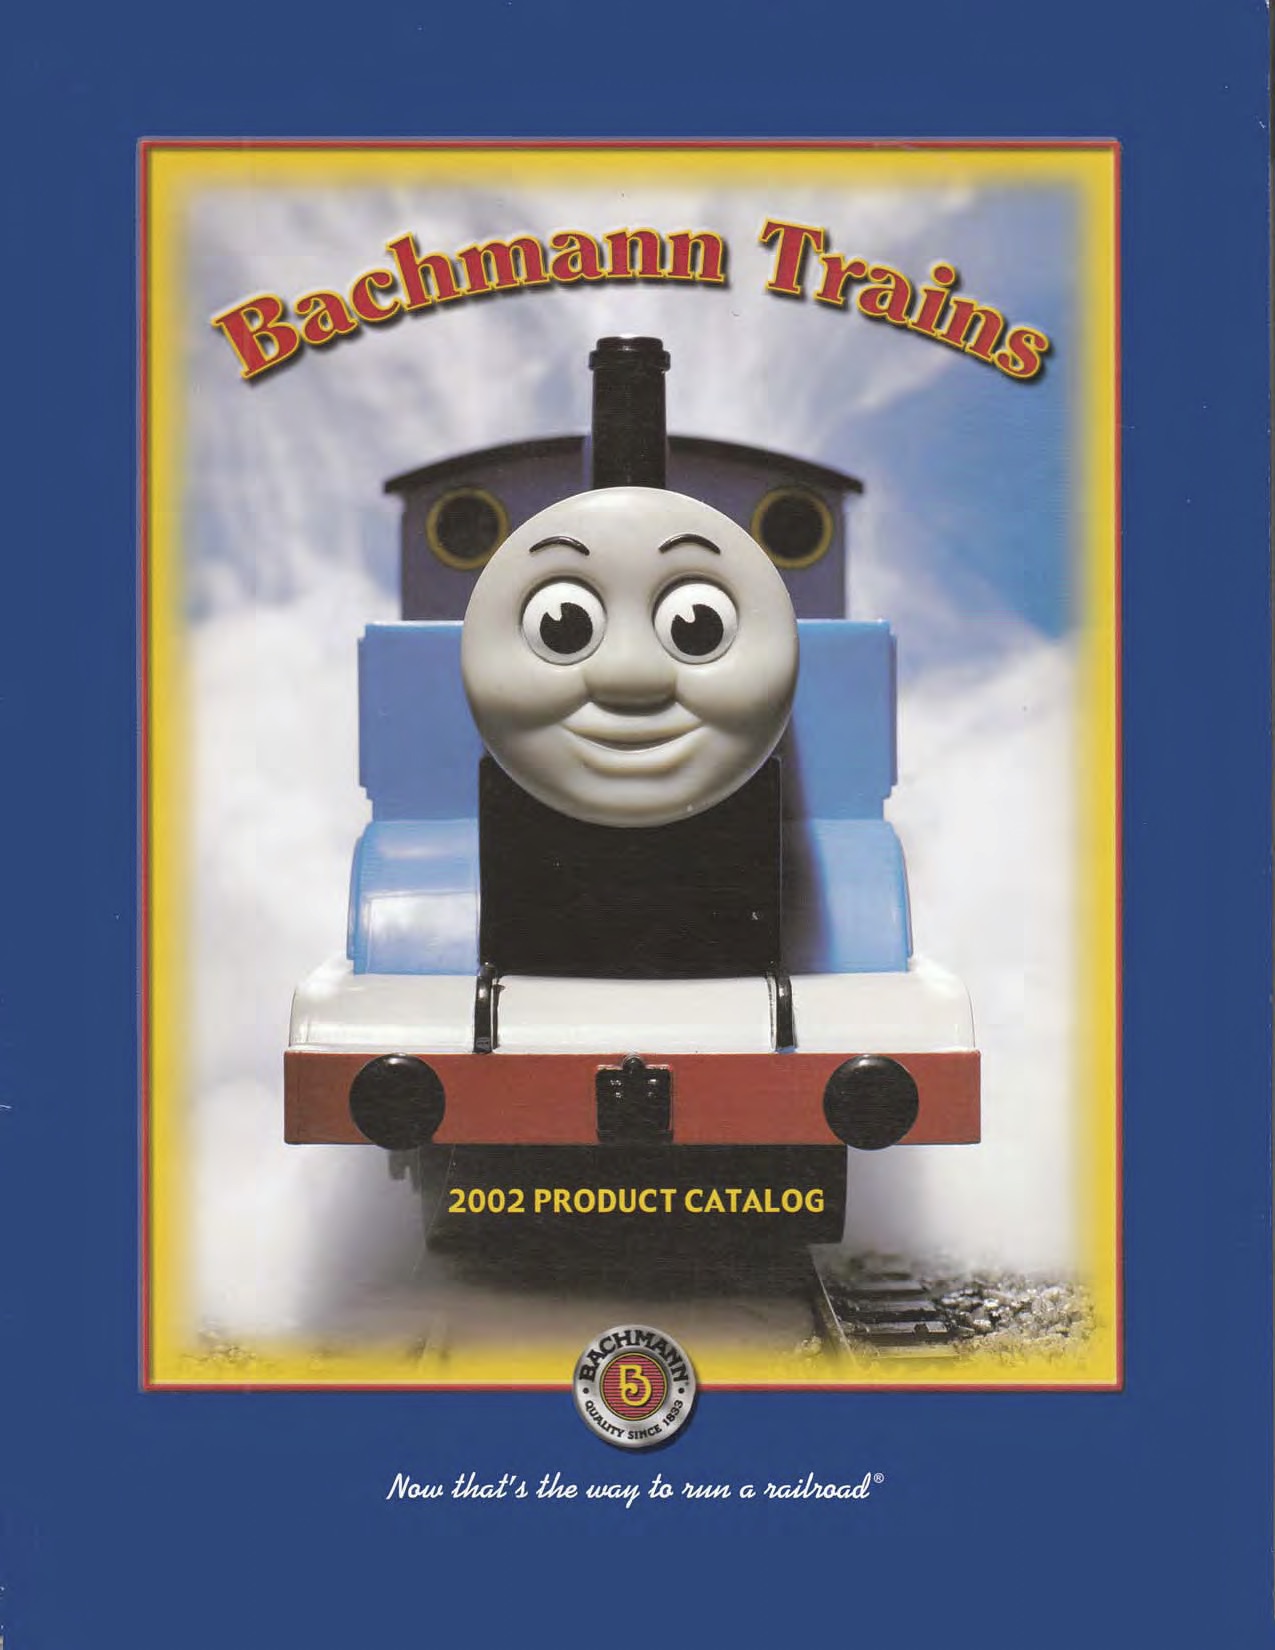 Bachmann Trains Katalog (Catalogue) 2002